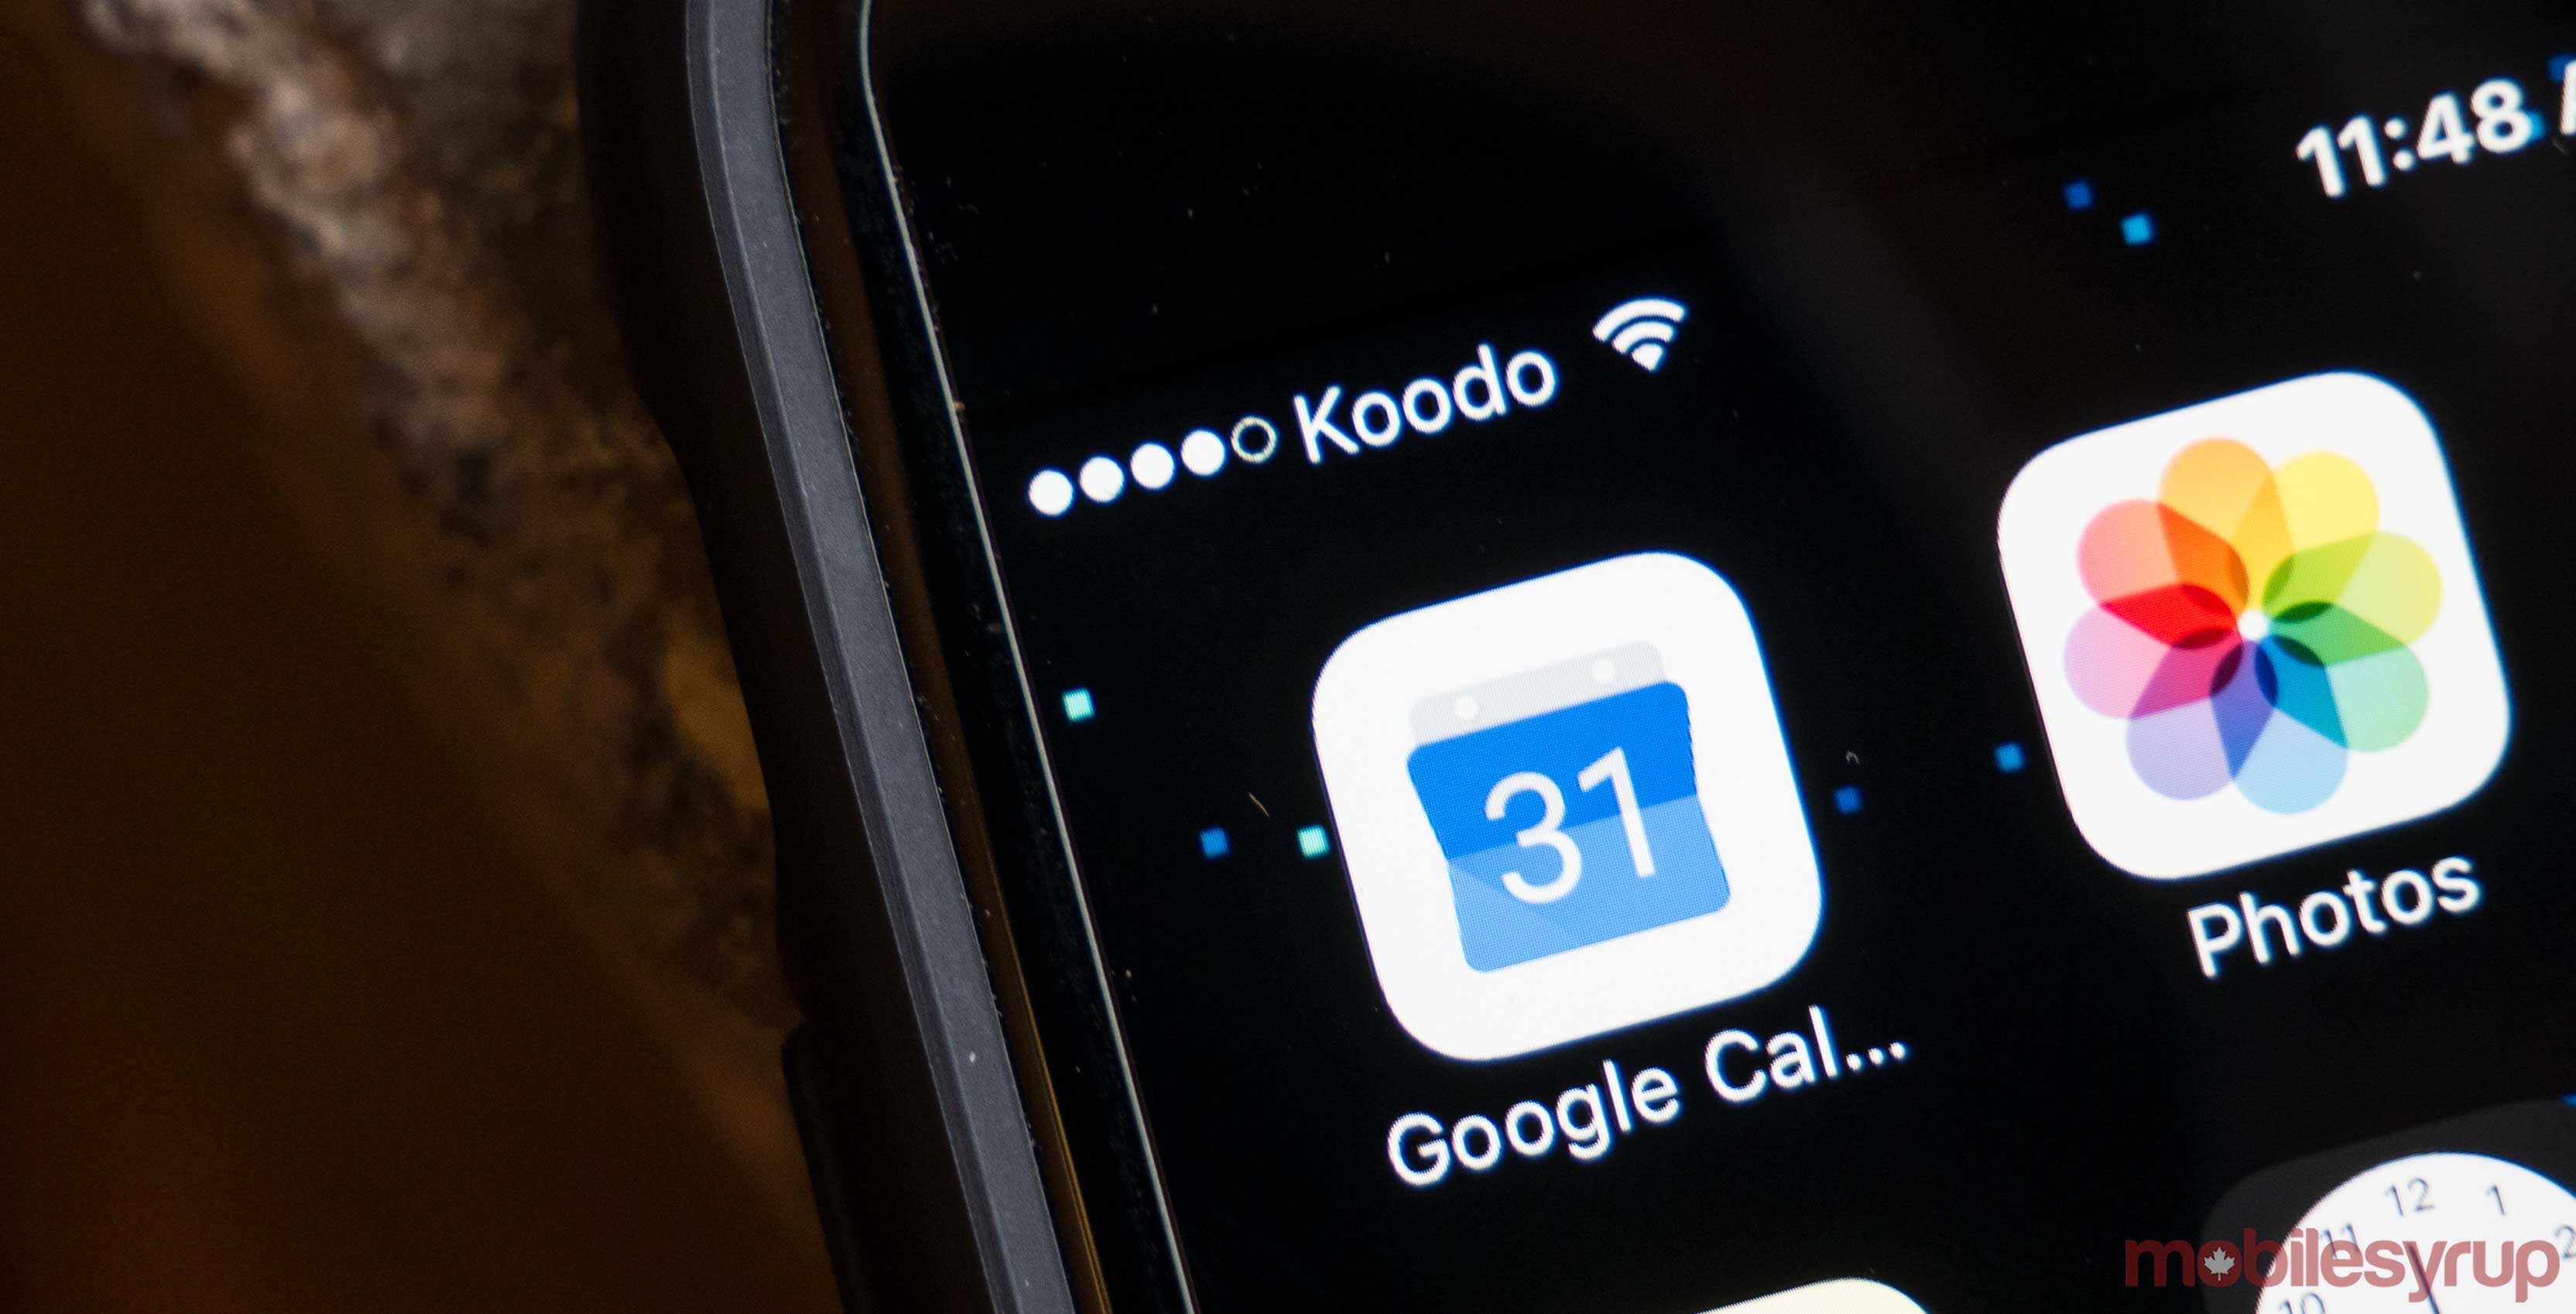 Koodo wireless signal shown on a smartphone